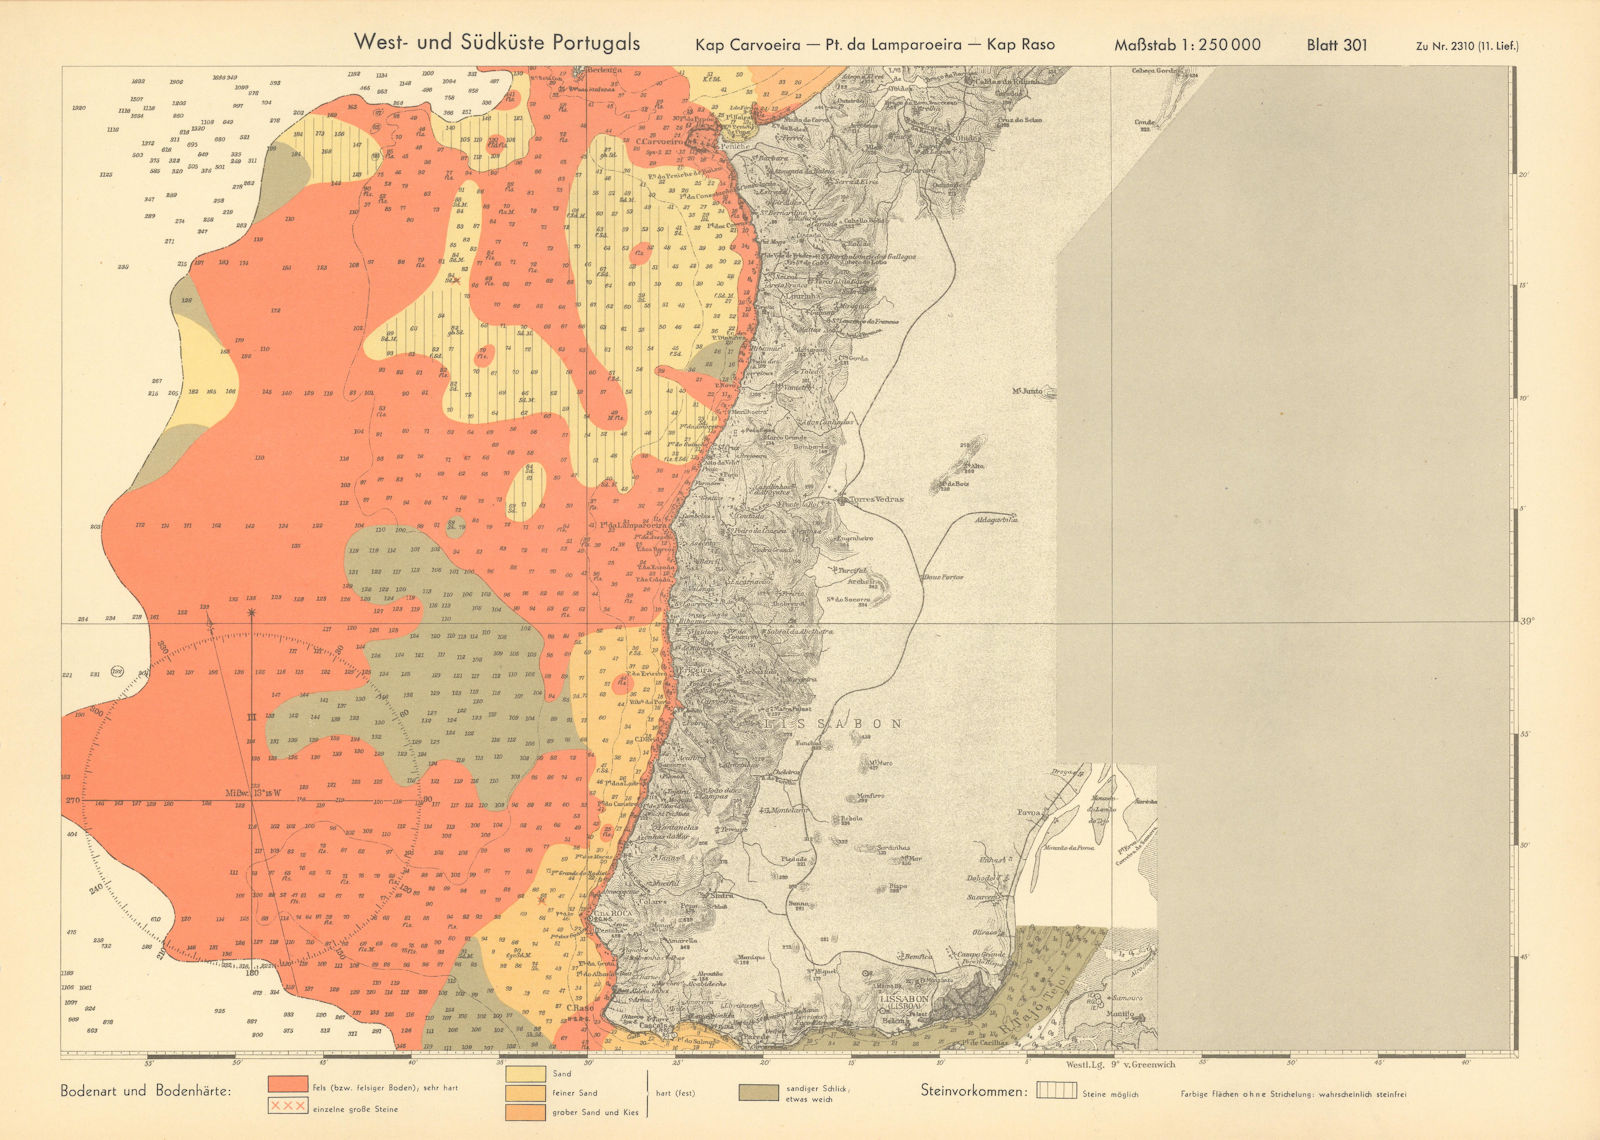 Lisboa distrito north coast. Lisbon Portugal. KRIEGSMARINE Nazi map 1943